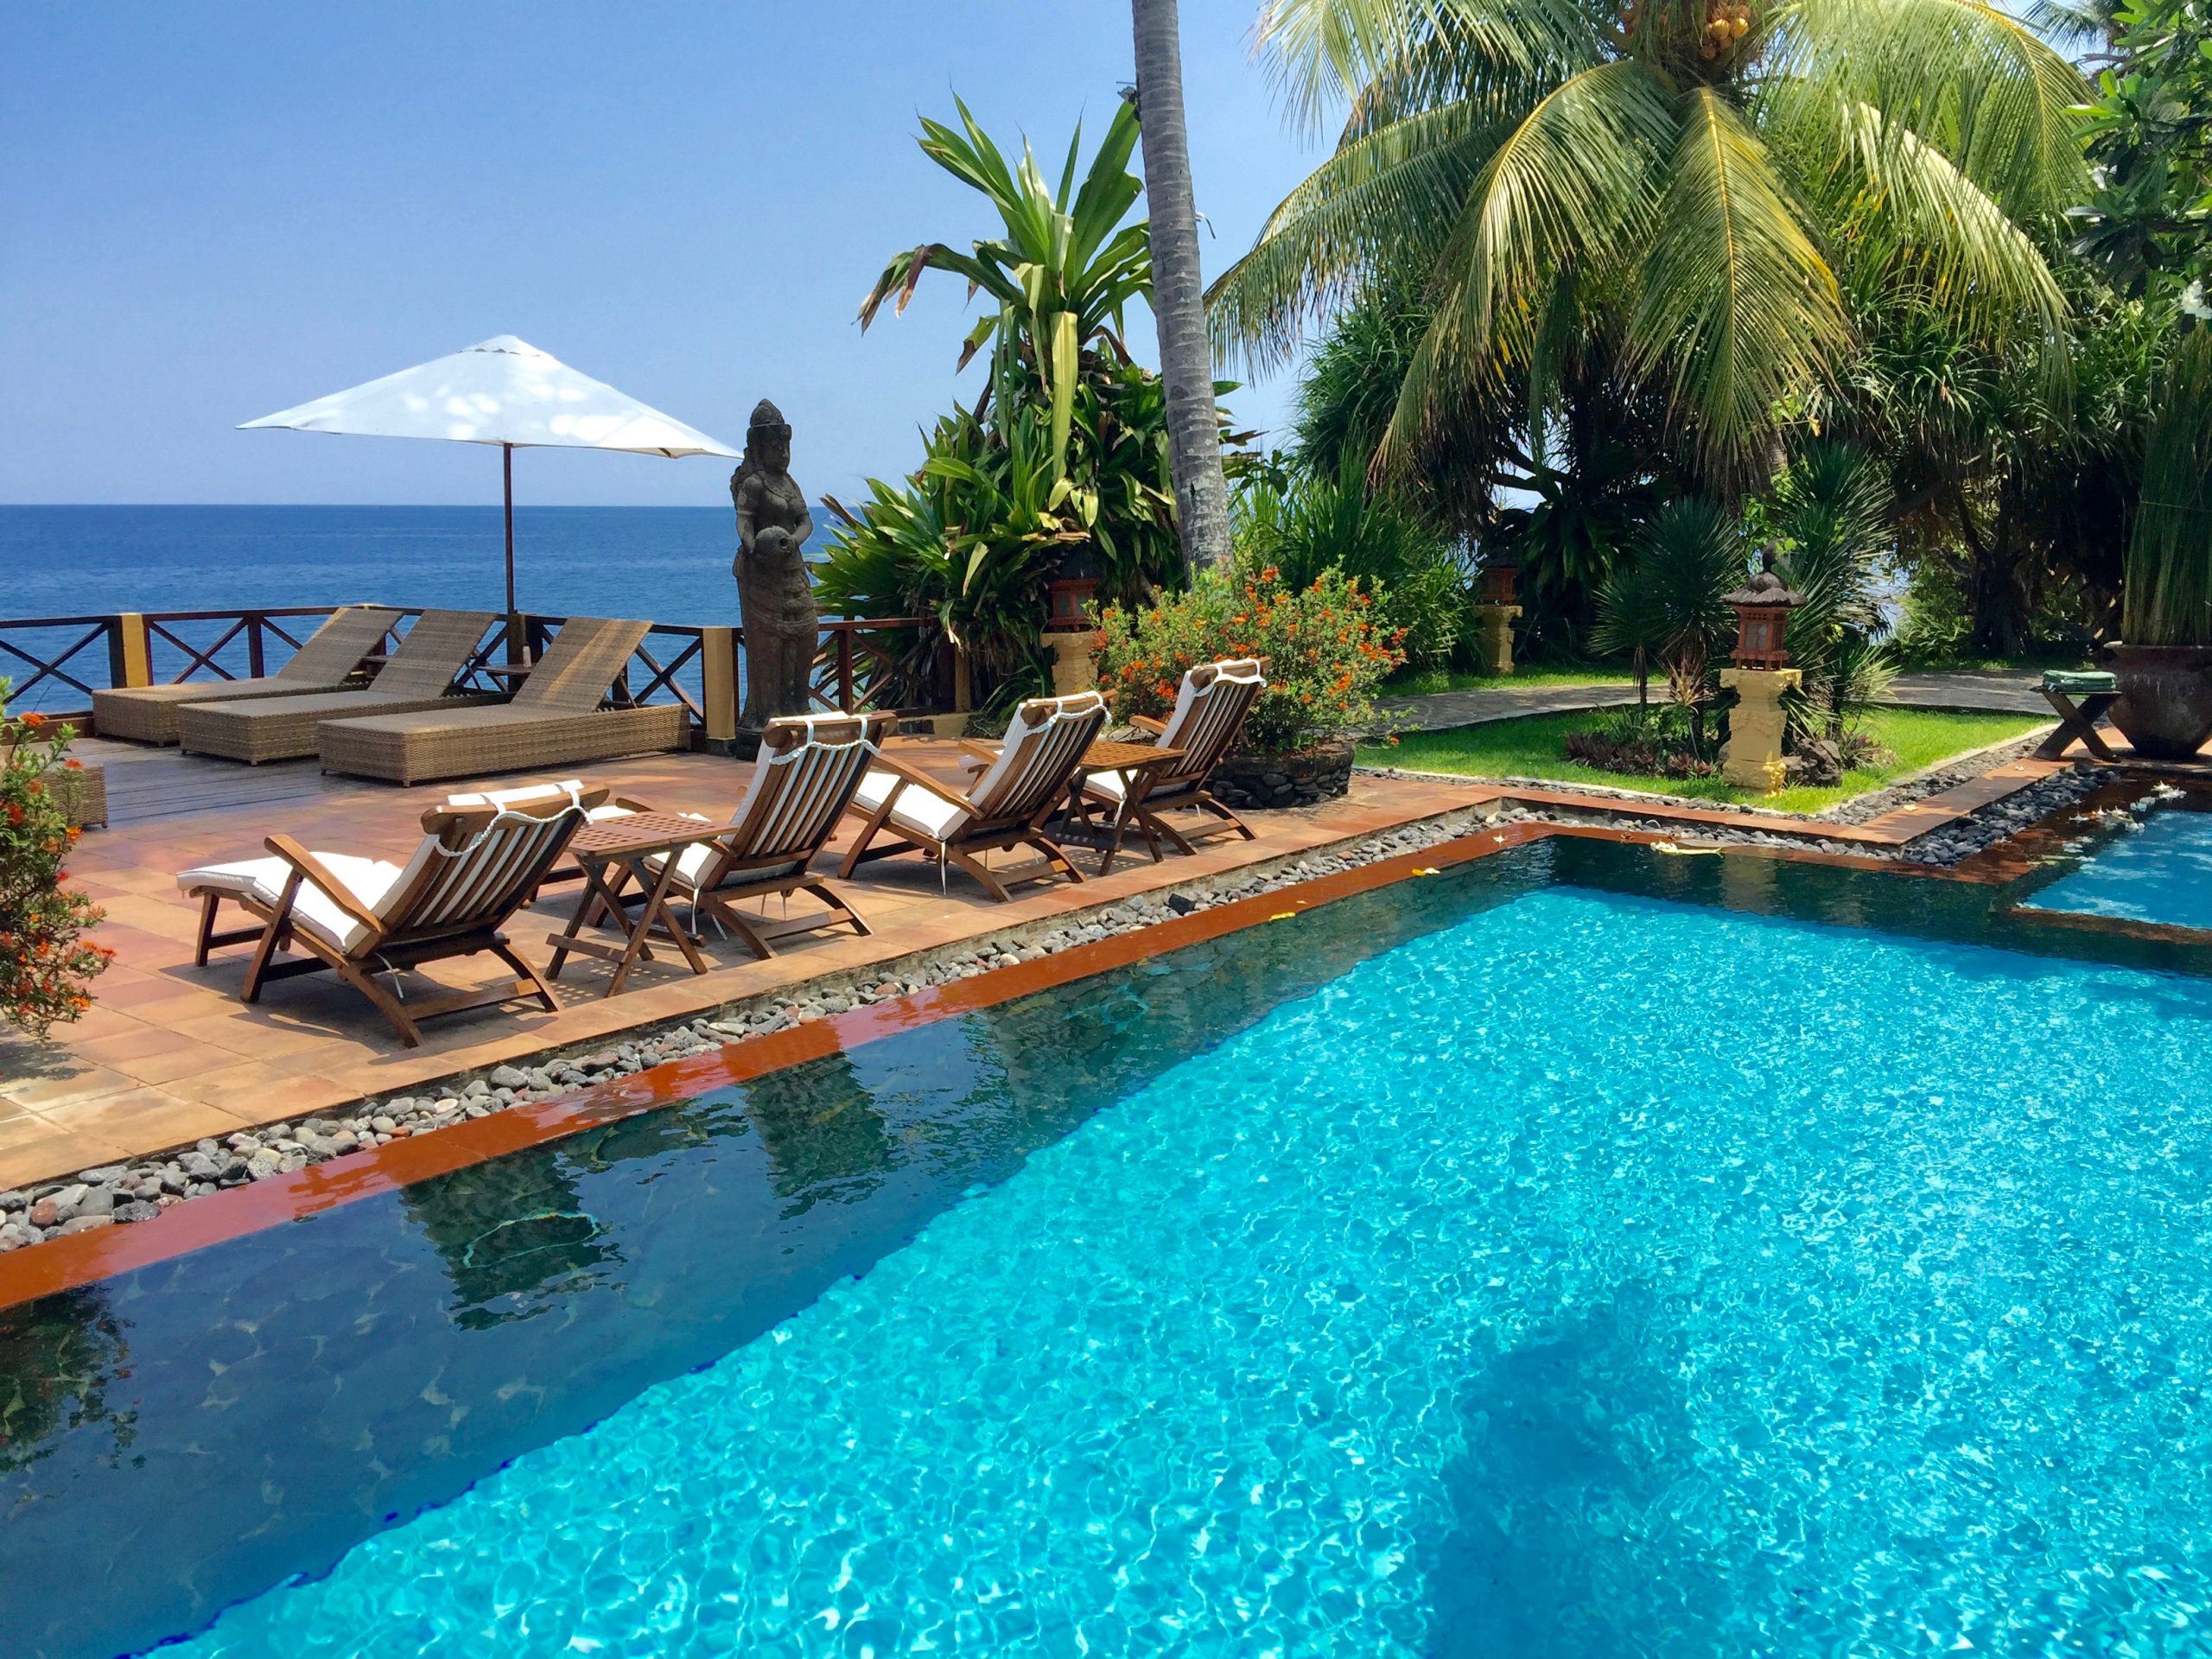 Villa Boreh Beach Resort and Spa!